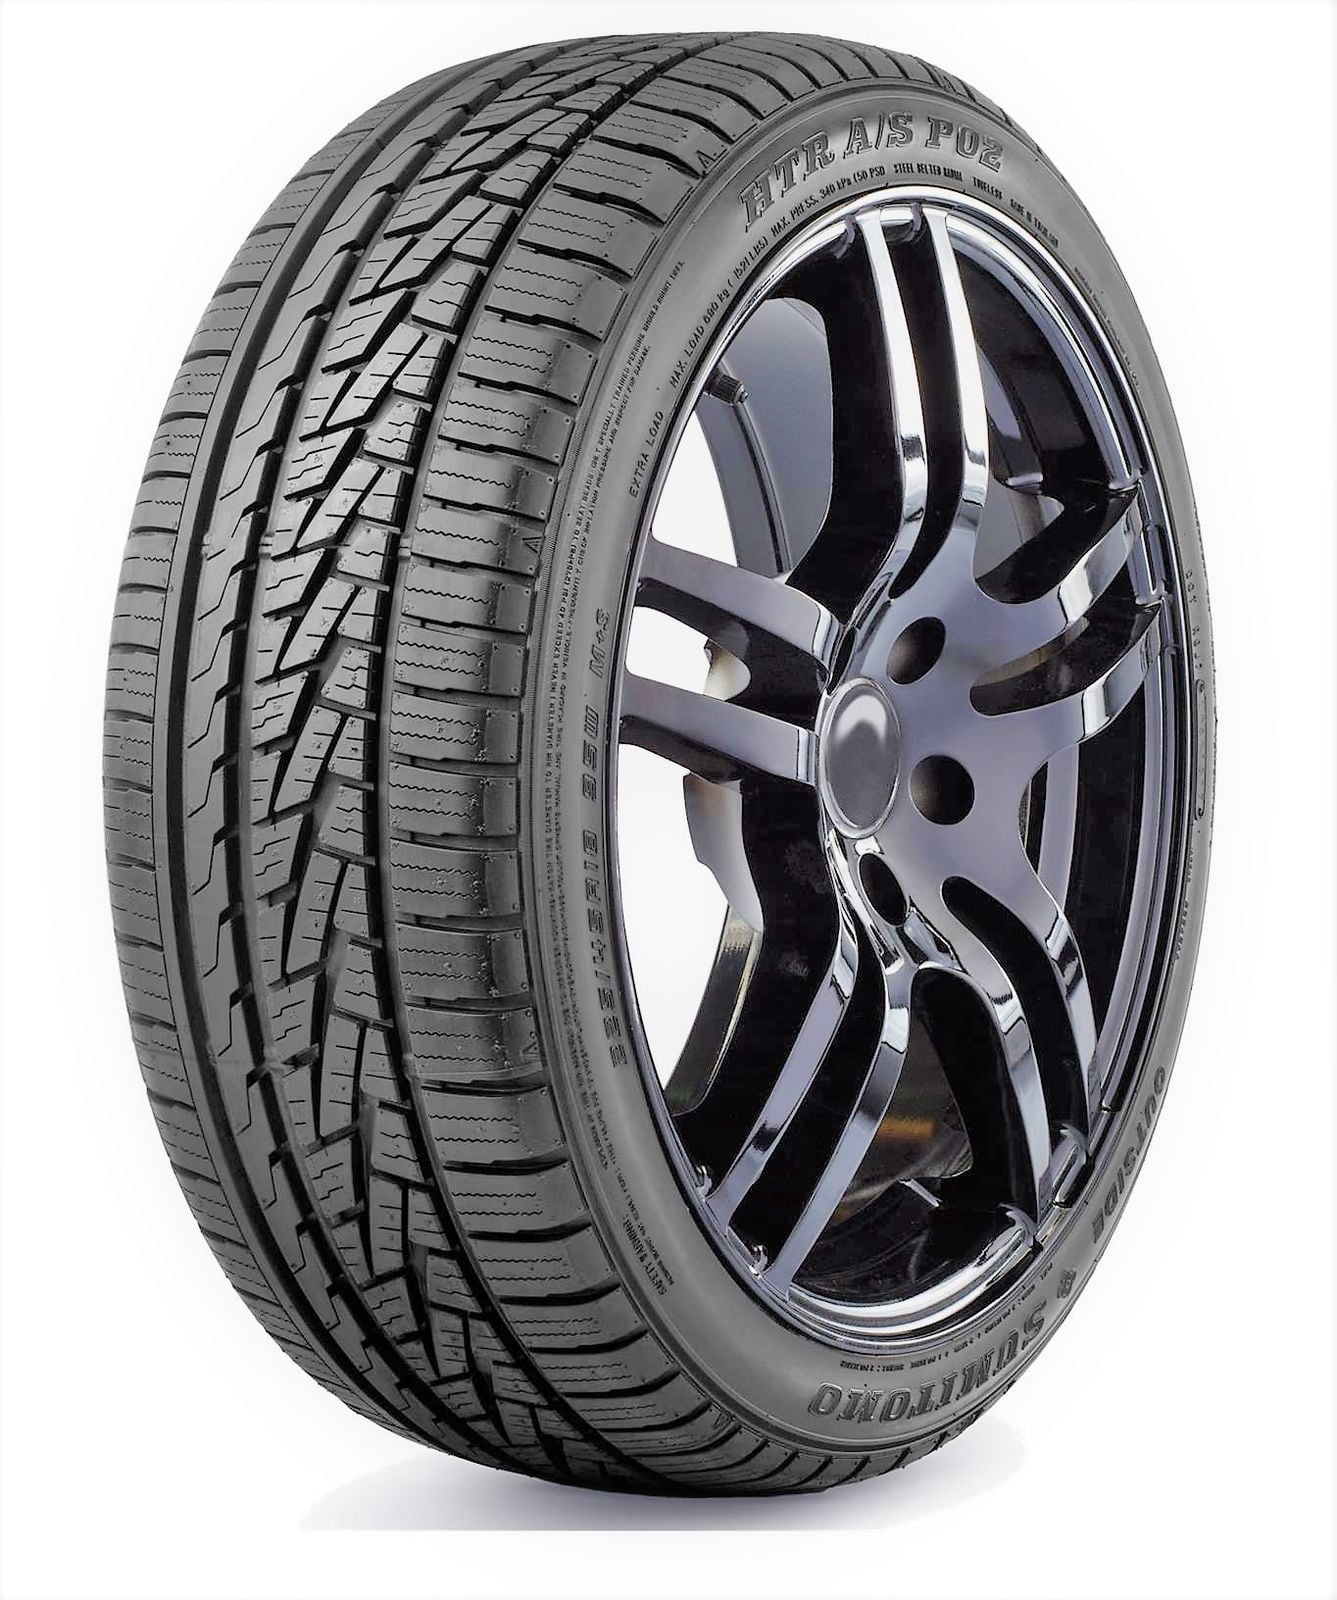 Ohtsu fp7000 P215/60R15 94H bsw all-season tire 